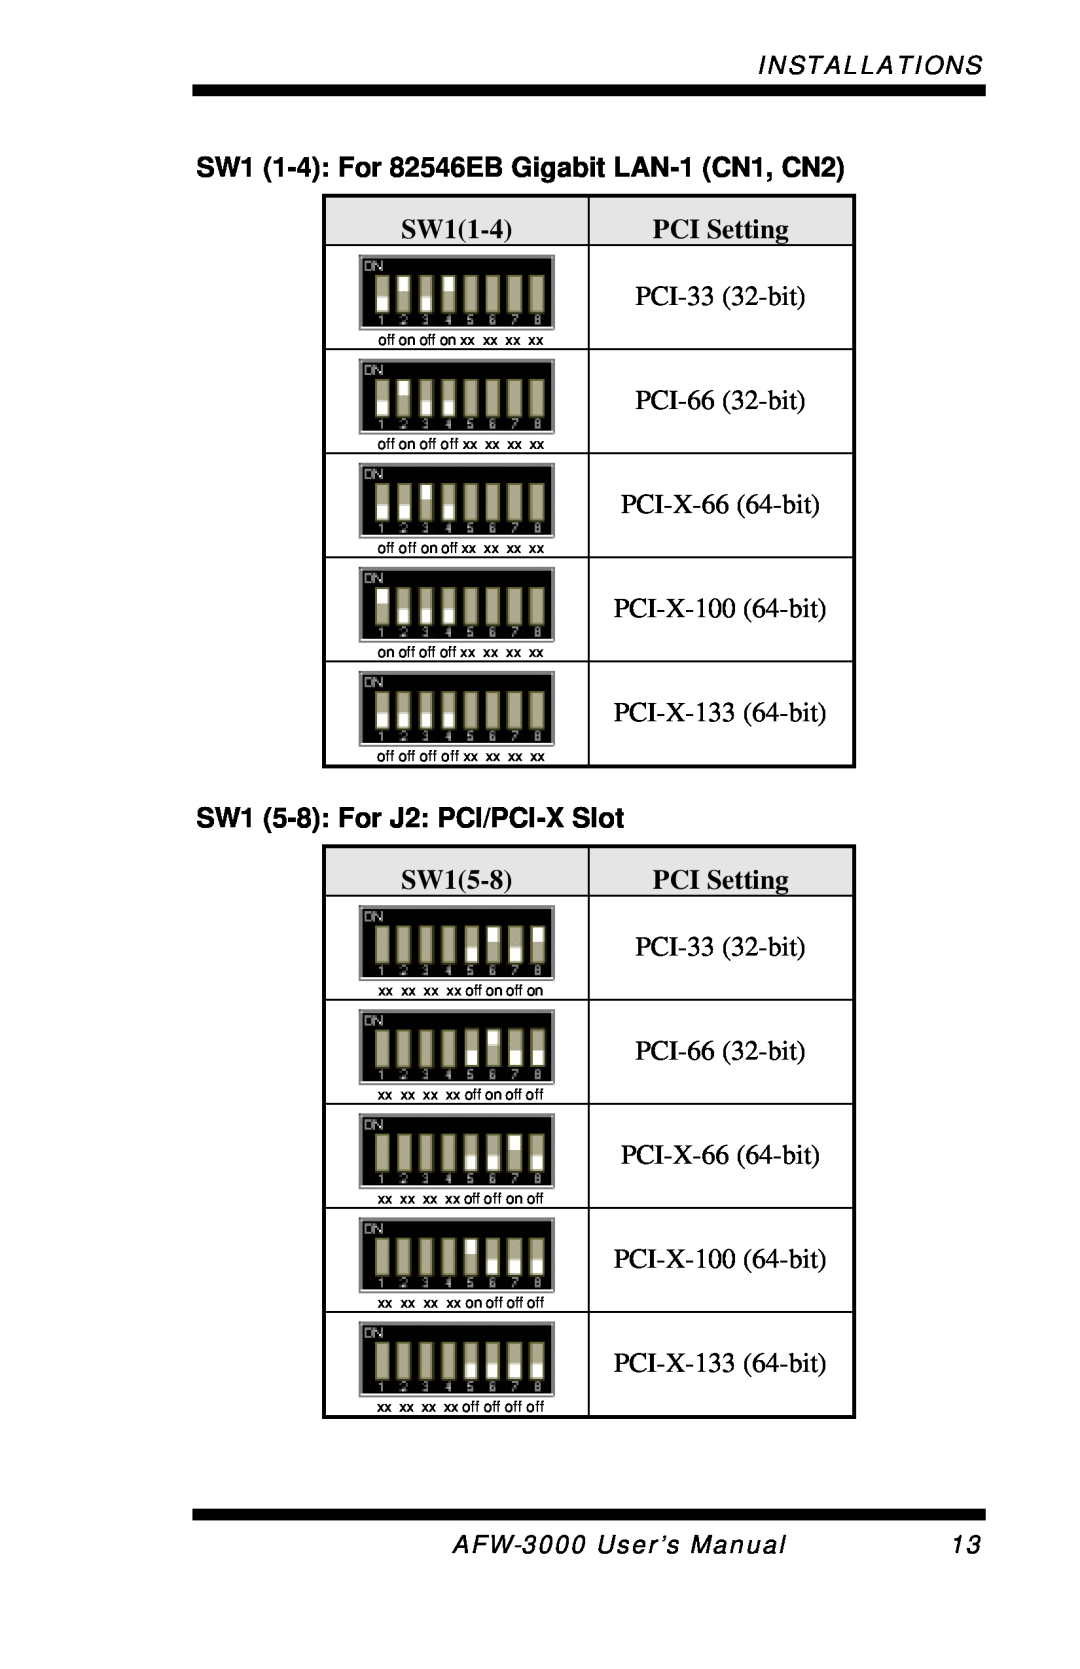 Intel E7501 SW1 1-4 For 82546EB Gigabit LAN-1CN1, CN2, SW11-4, PCI Setting, SW1 5-8 For J2 PCI/PCI-XSlot, SW15-8 